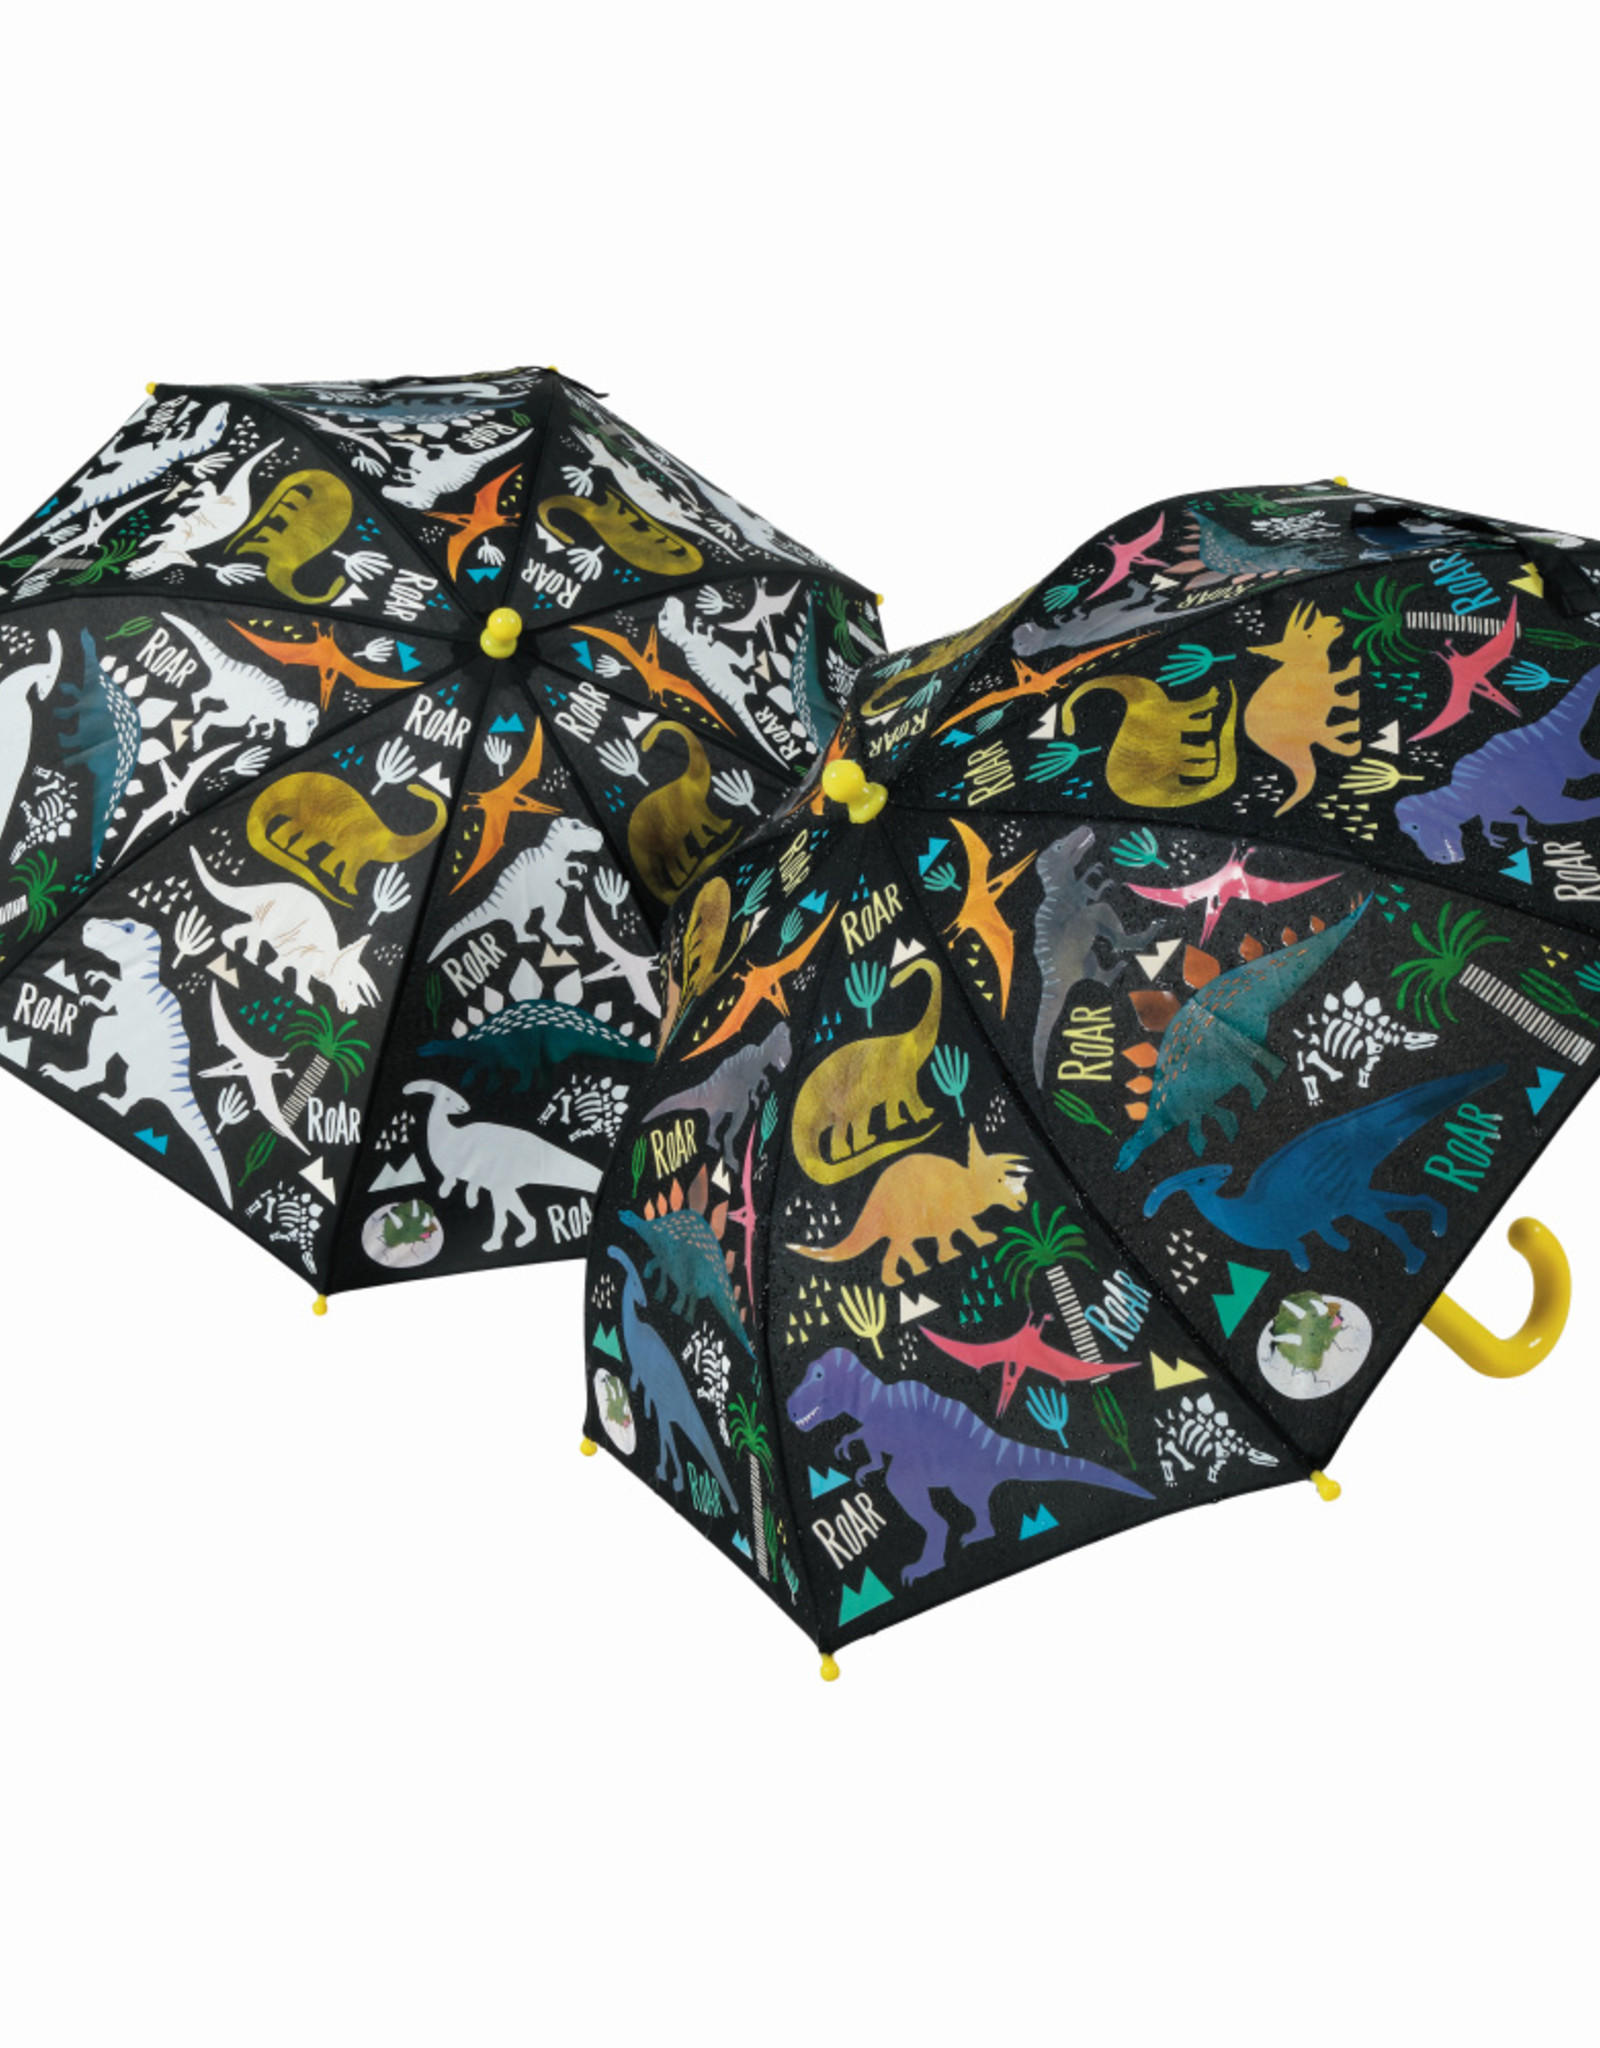 Colour Change Umbrella - Dinosaur